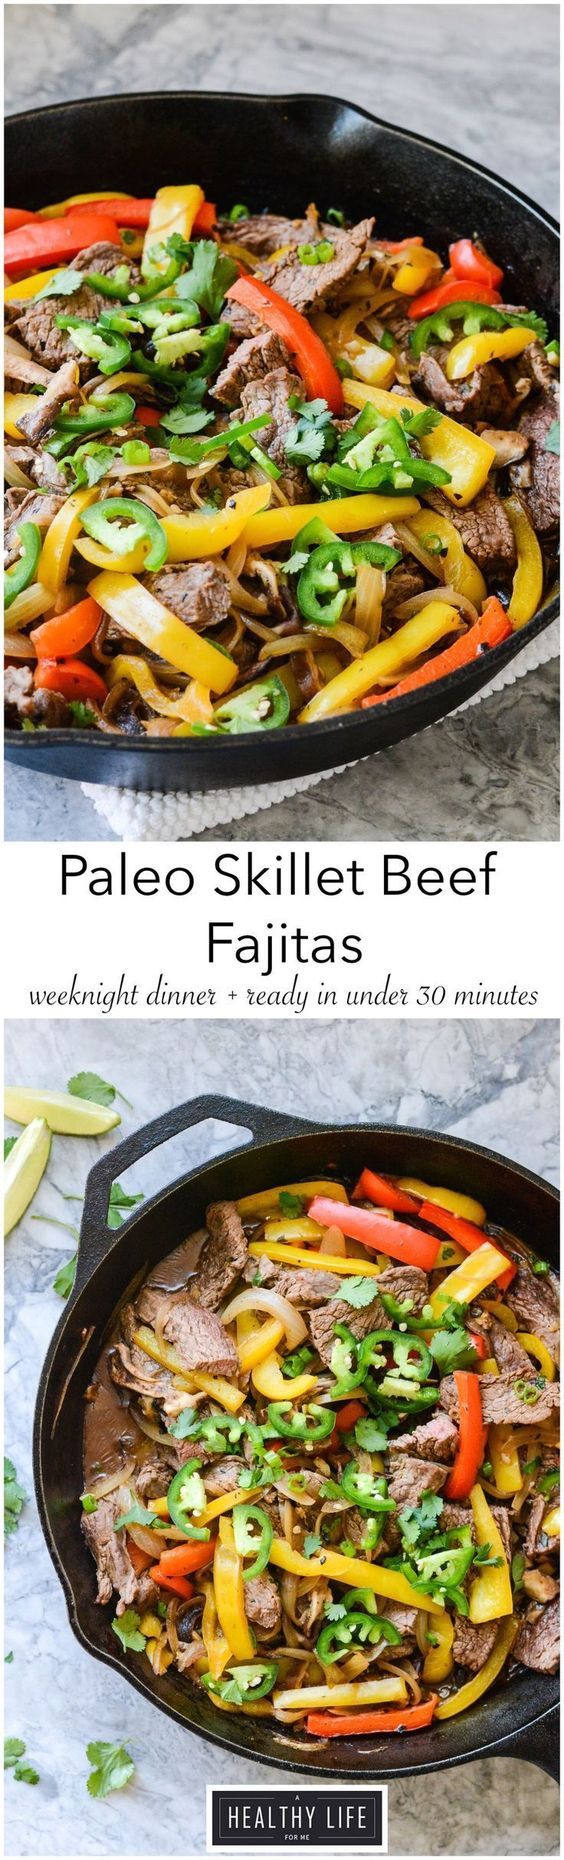 Paleo Skillet Beef Fajitas